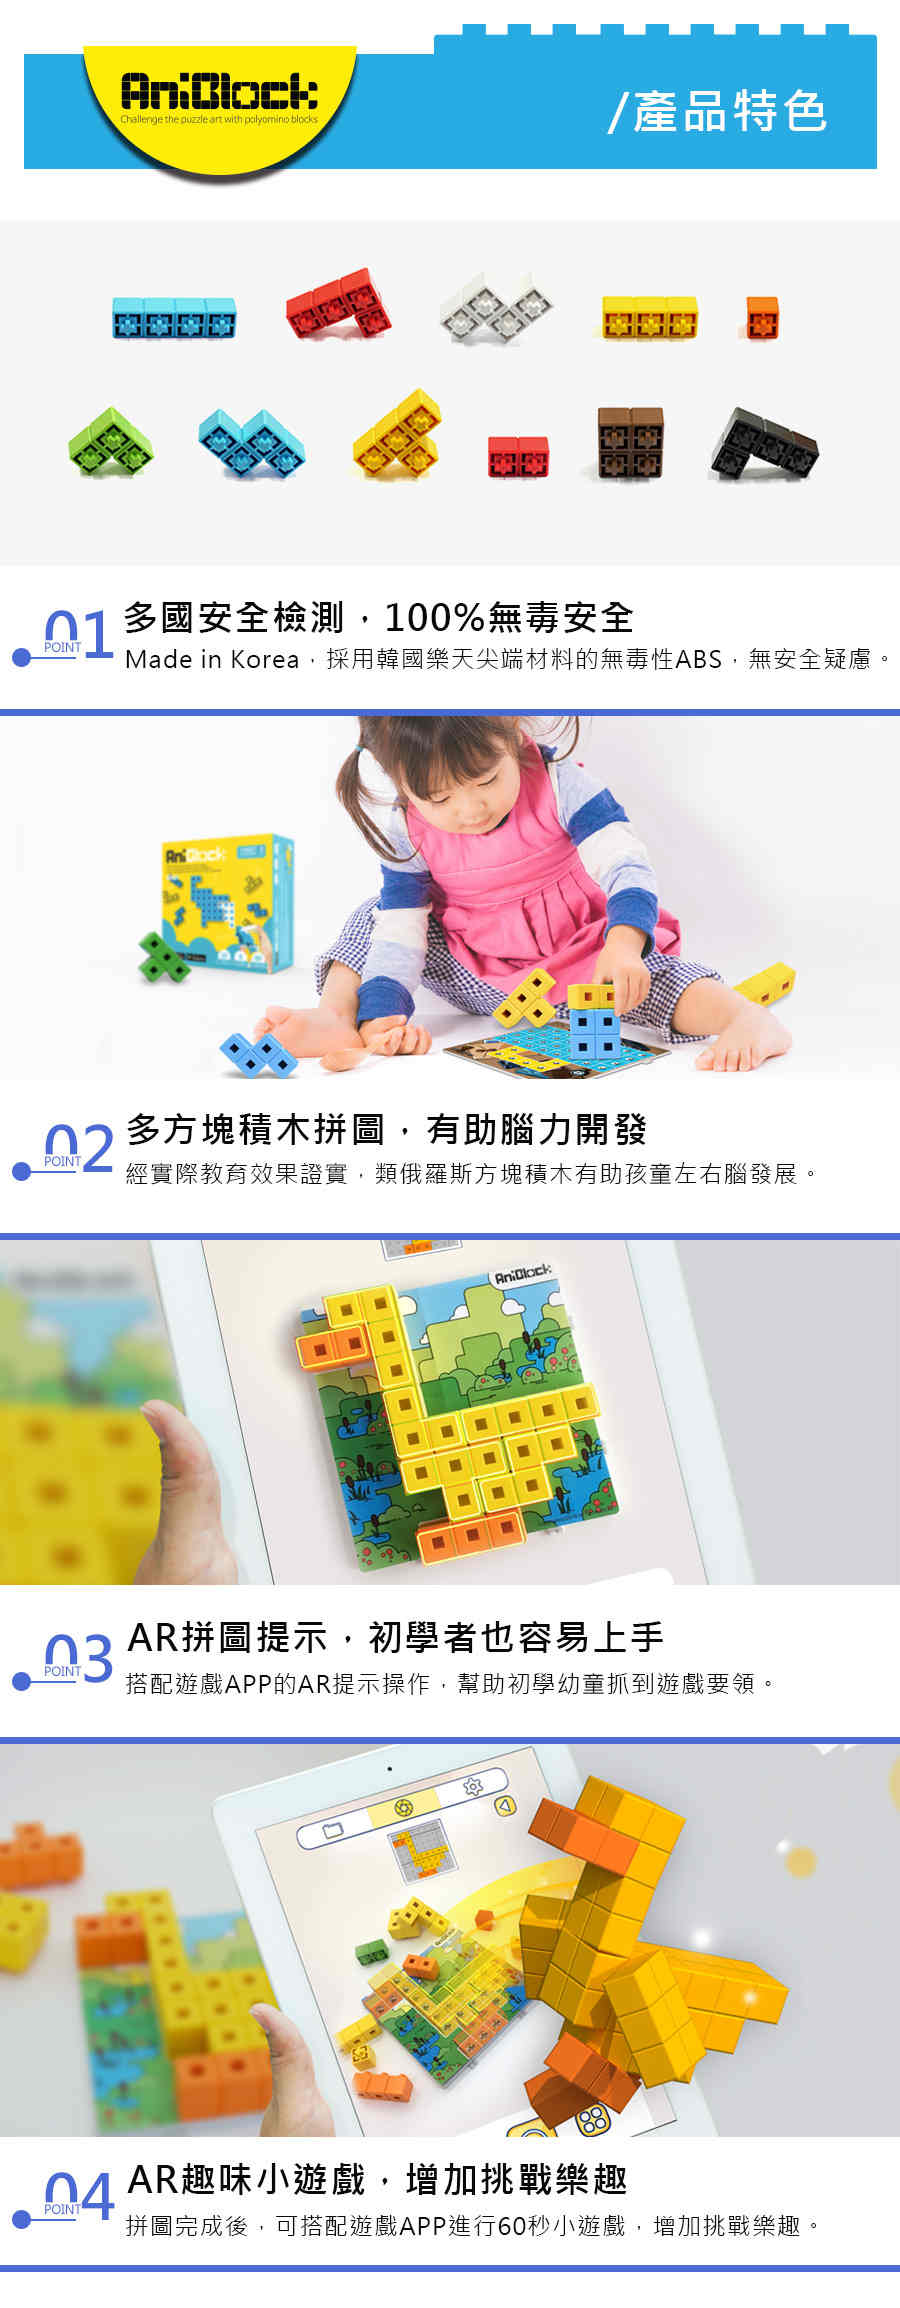 AniBlock安尼博樂 AR積木拼圖，韓國製造，採用樂天無毒性原料，搭配AR應用讓孩童更樂於腦力激盪